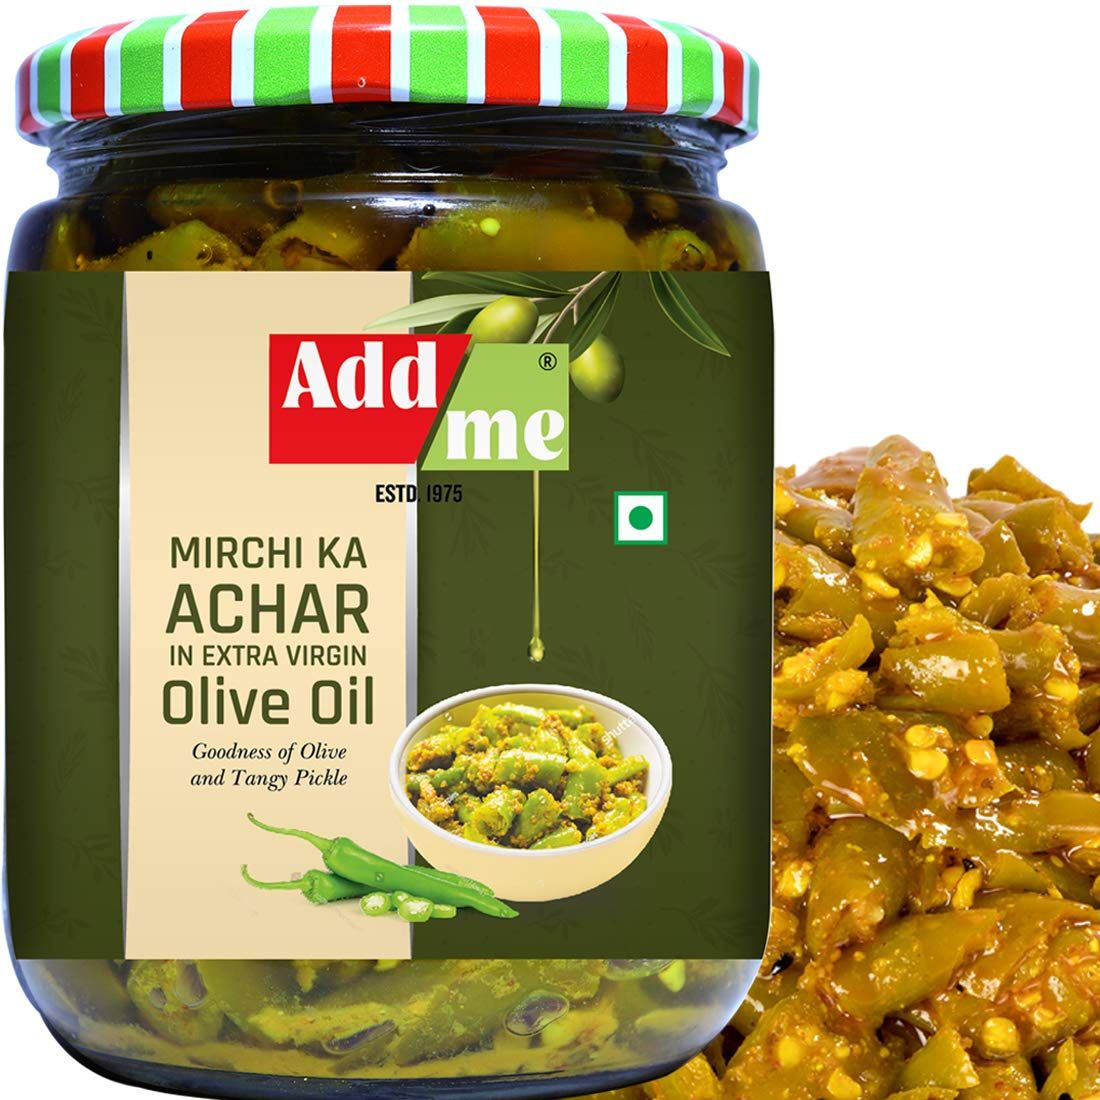 Add me Chilli Pickle in Olive Oil Image